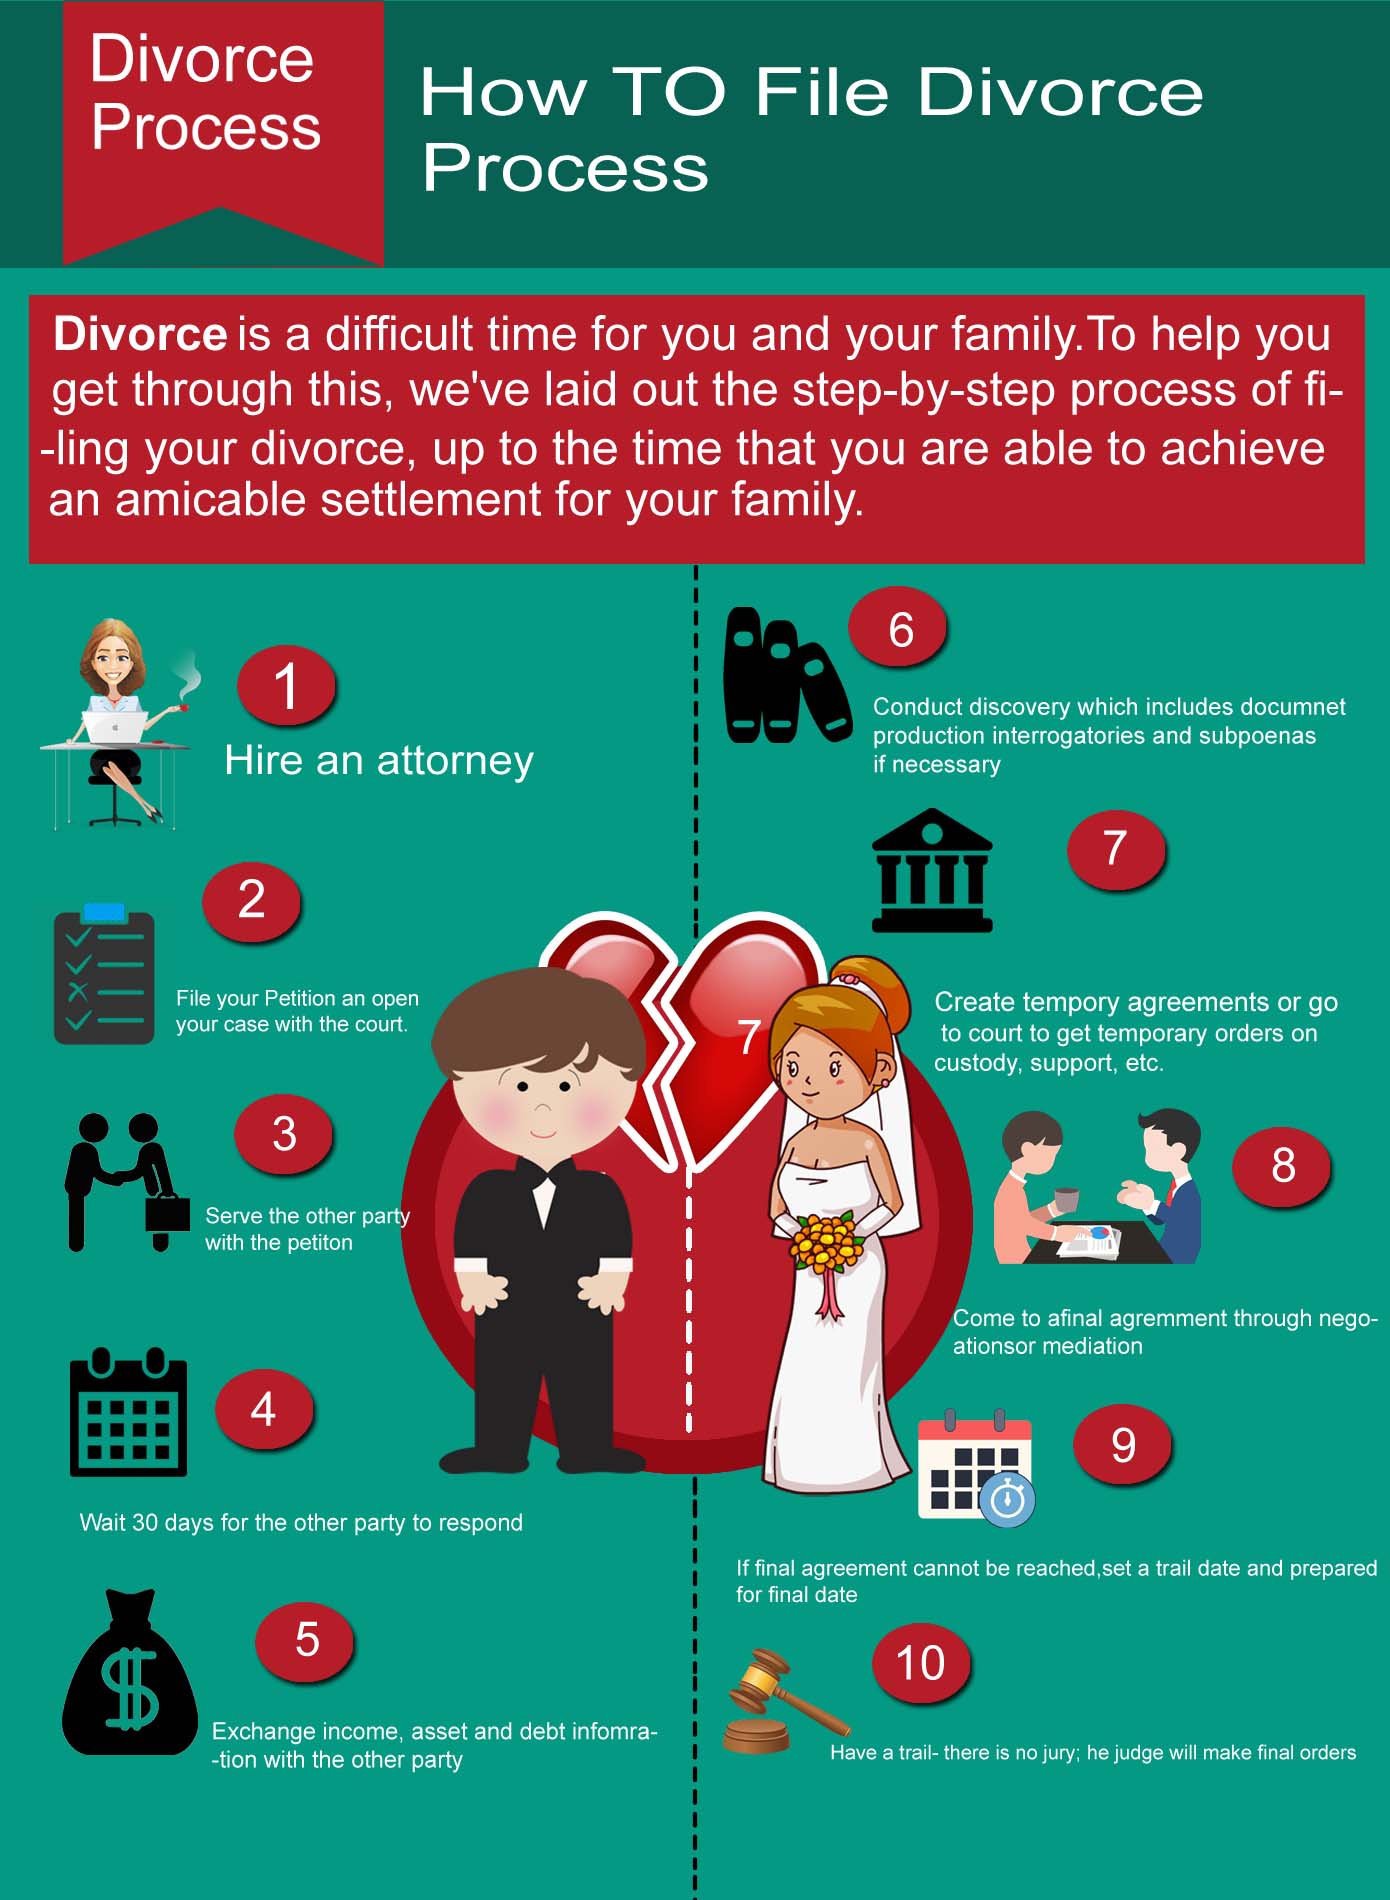 mississippi-chancery-court-divorce-forms-how-to-file-for-divorce-online